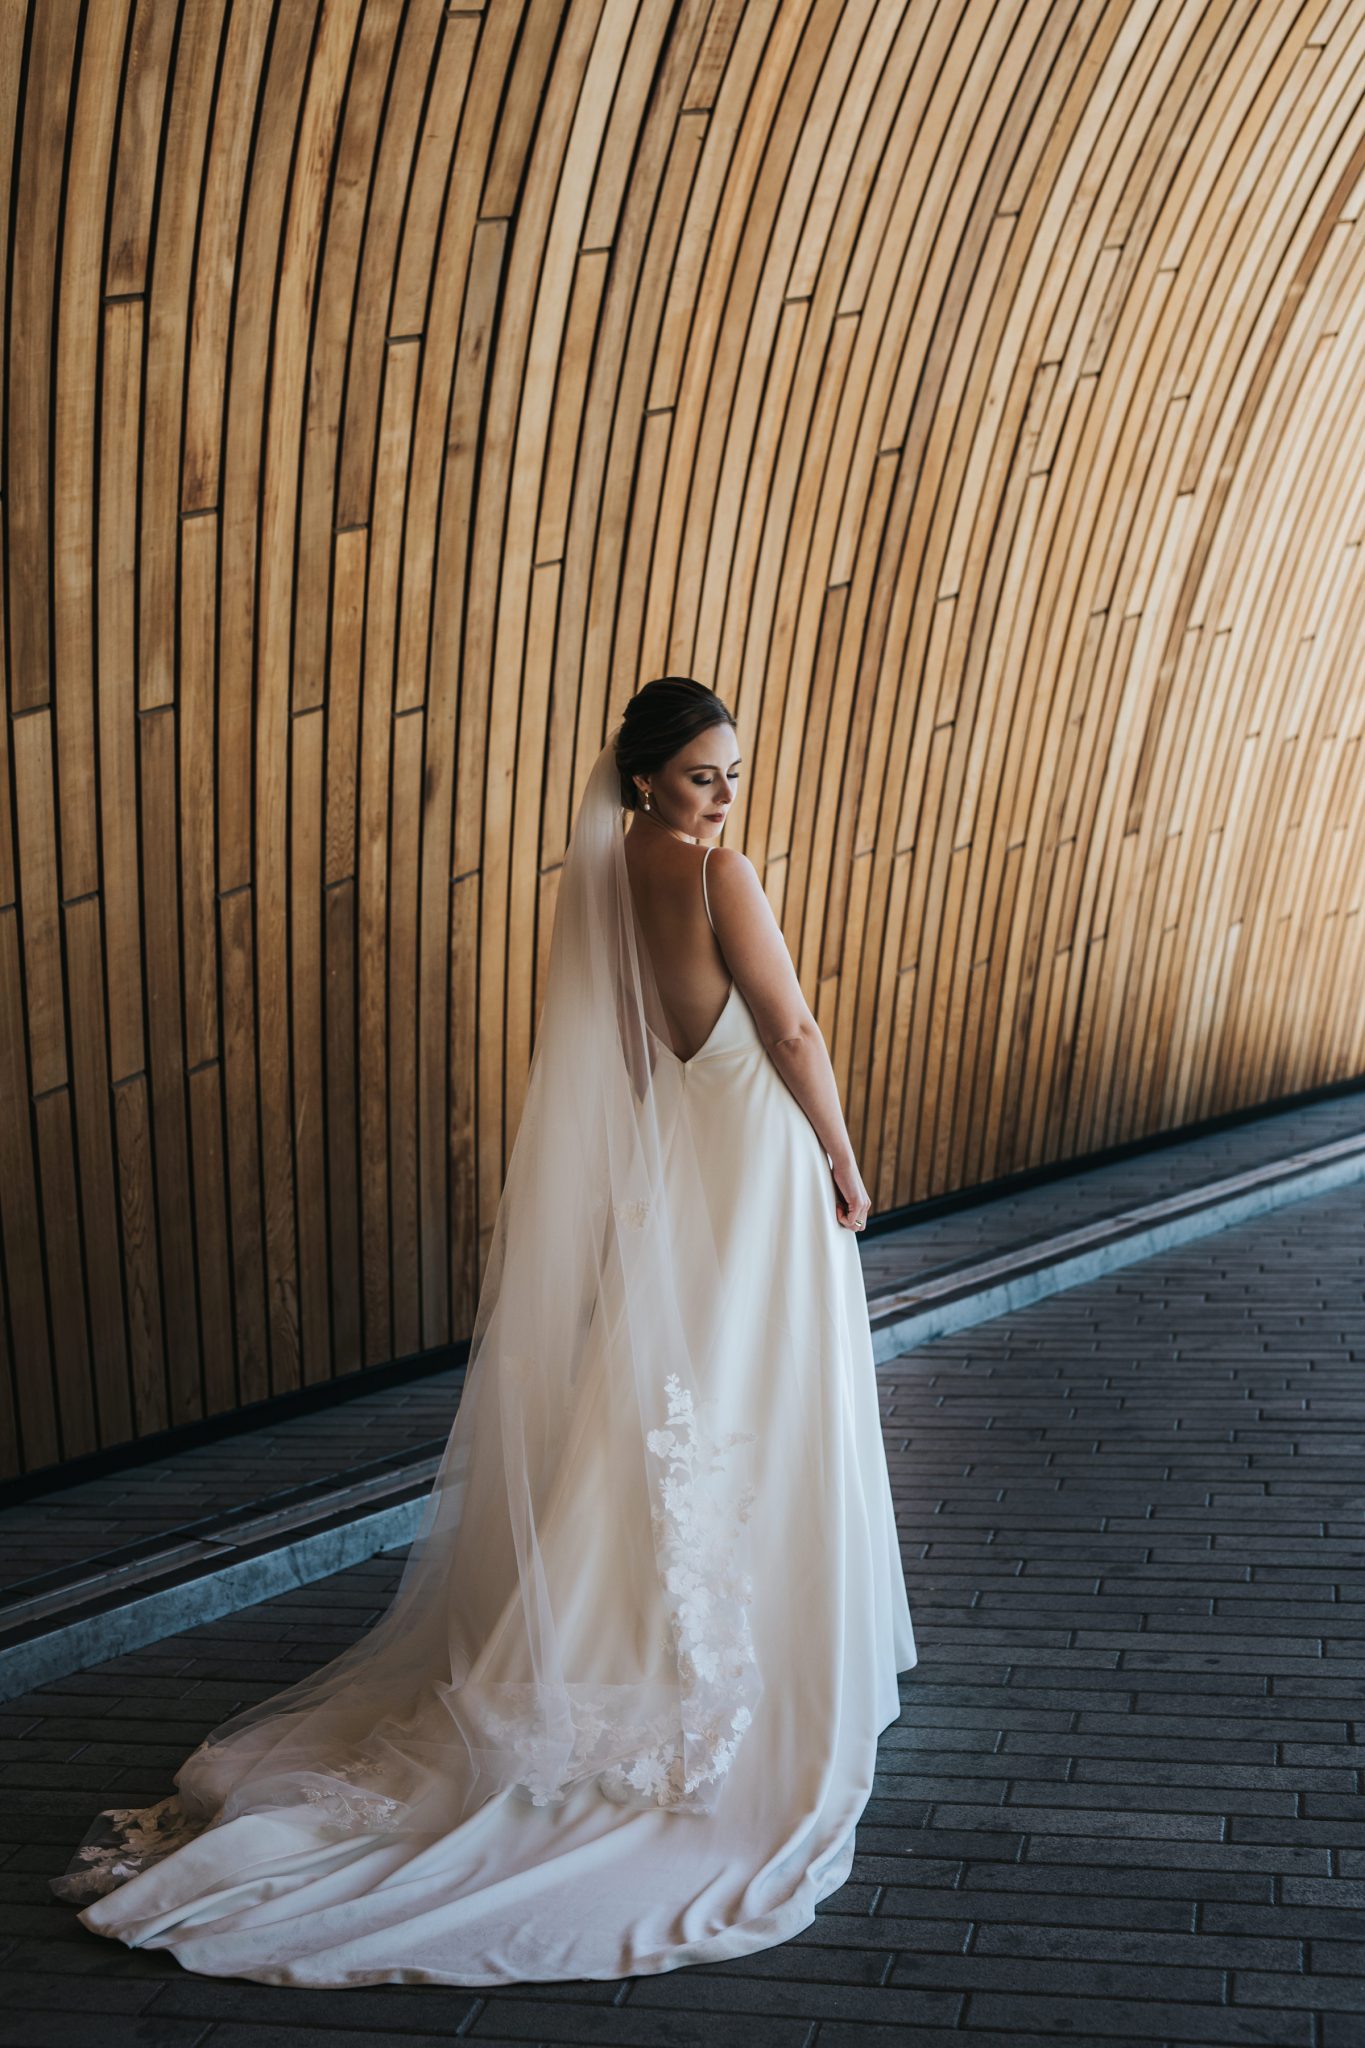 Stylish downtown Calgary bride, wedding dress, veil